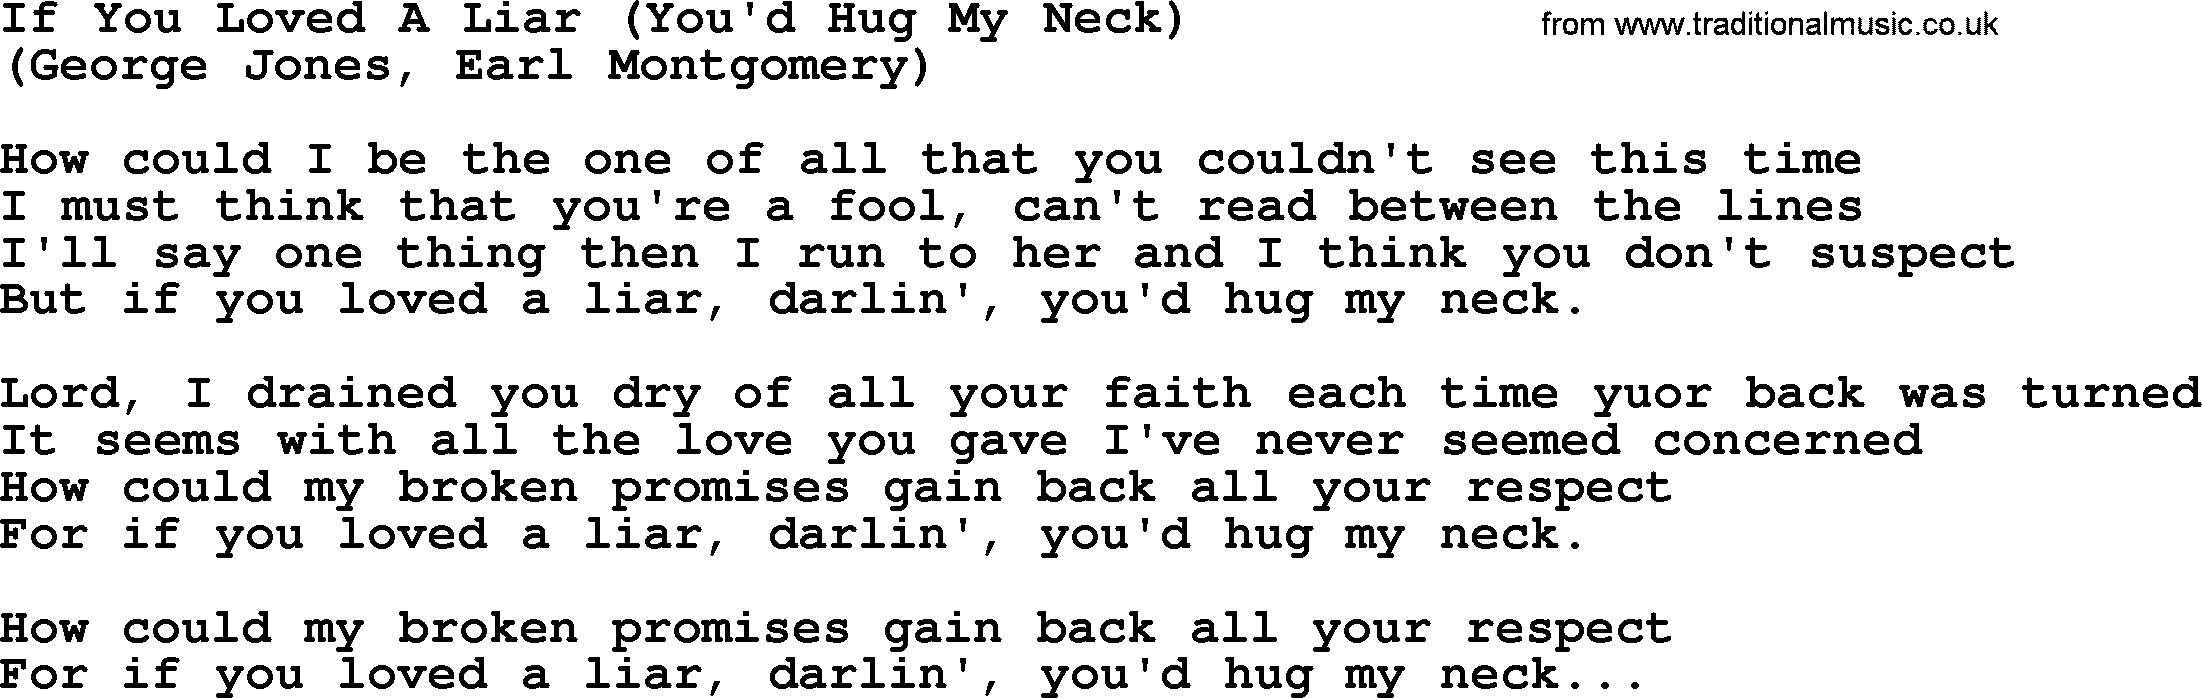 George Jones song: If You Loved A Liar (you'd Hug My Neck), lyrics